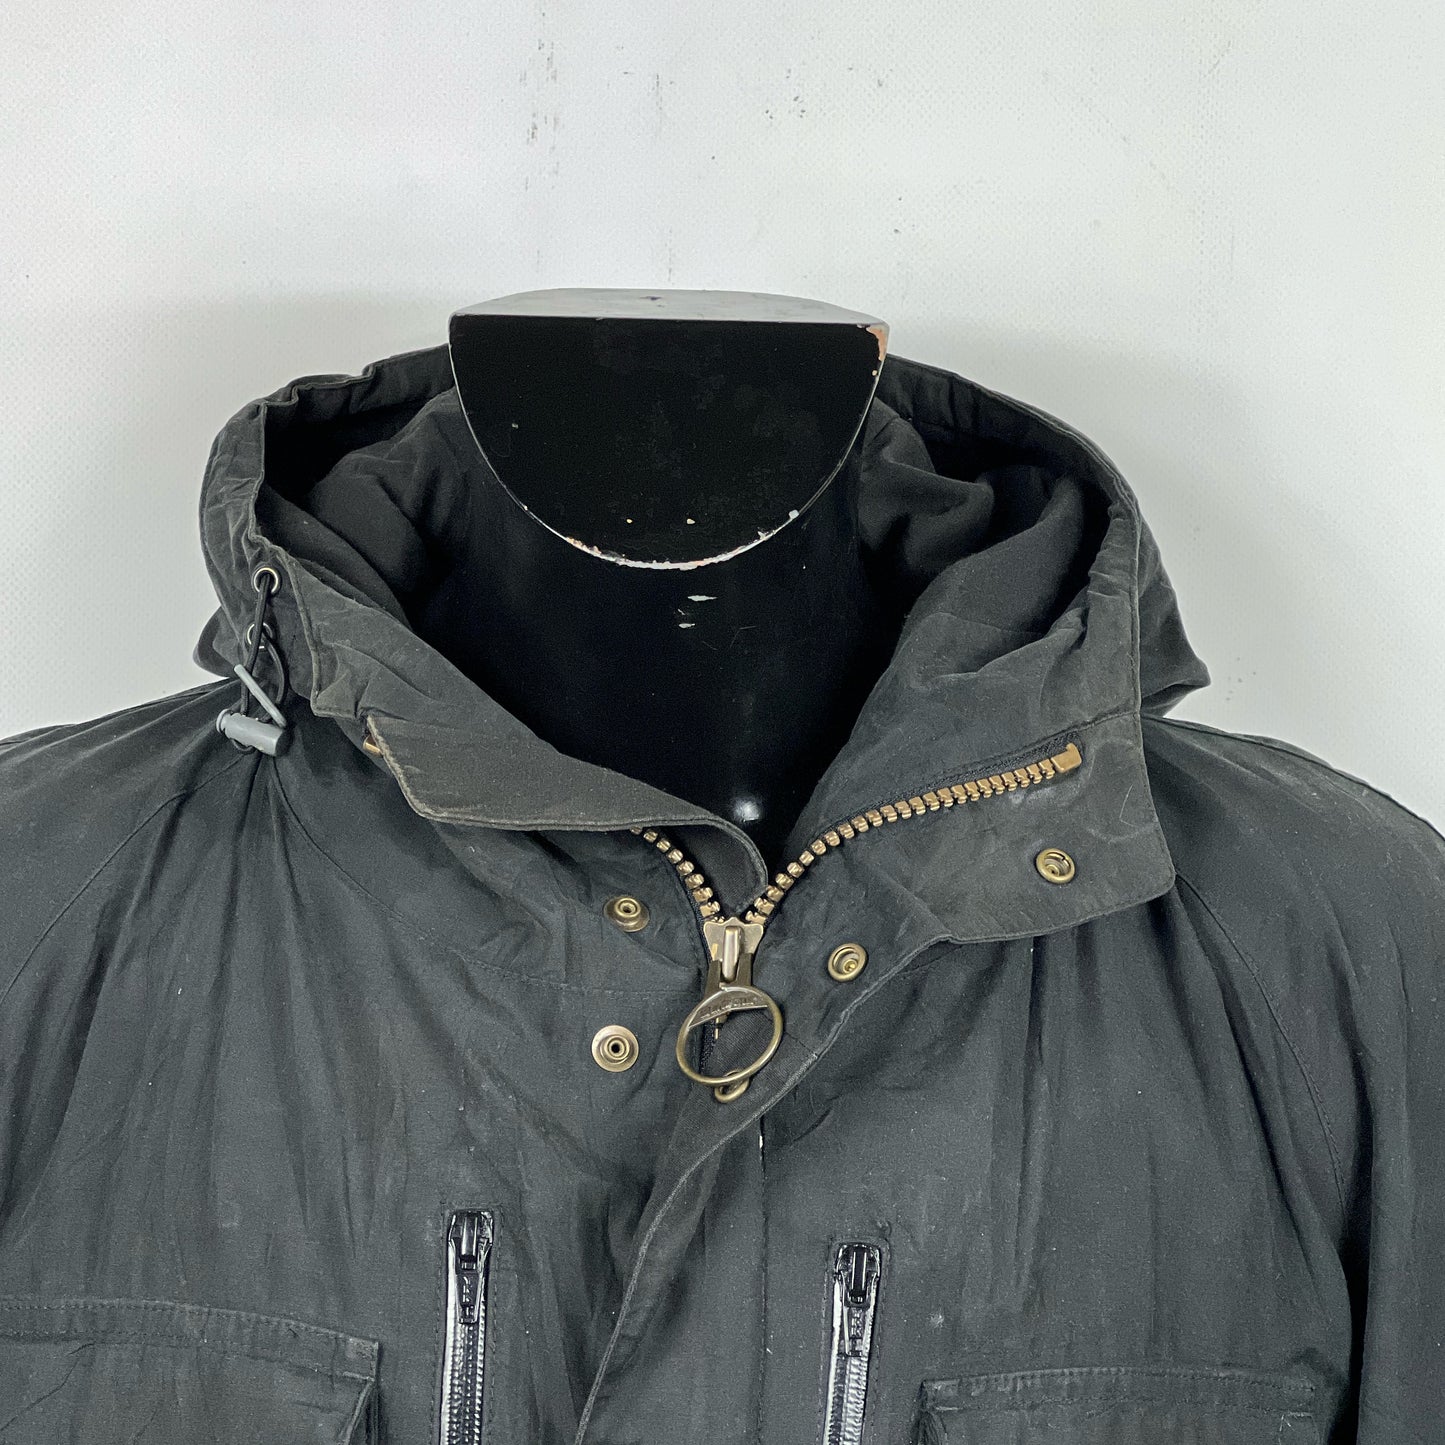 Giacca Barbour Dept B nera Galbi wax jacket Medium-Black Dept B wax jacket size M